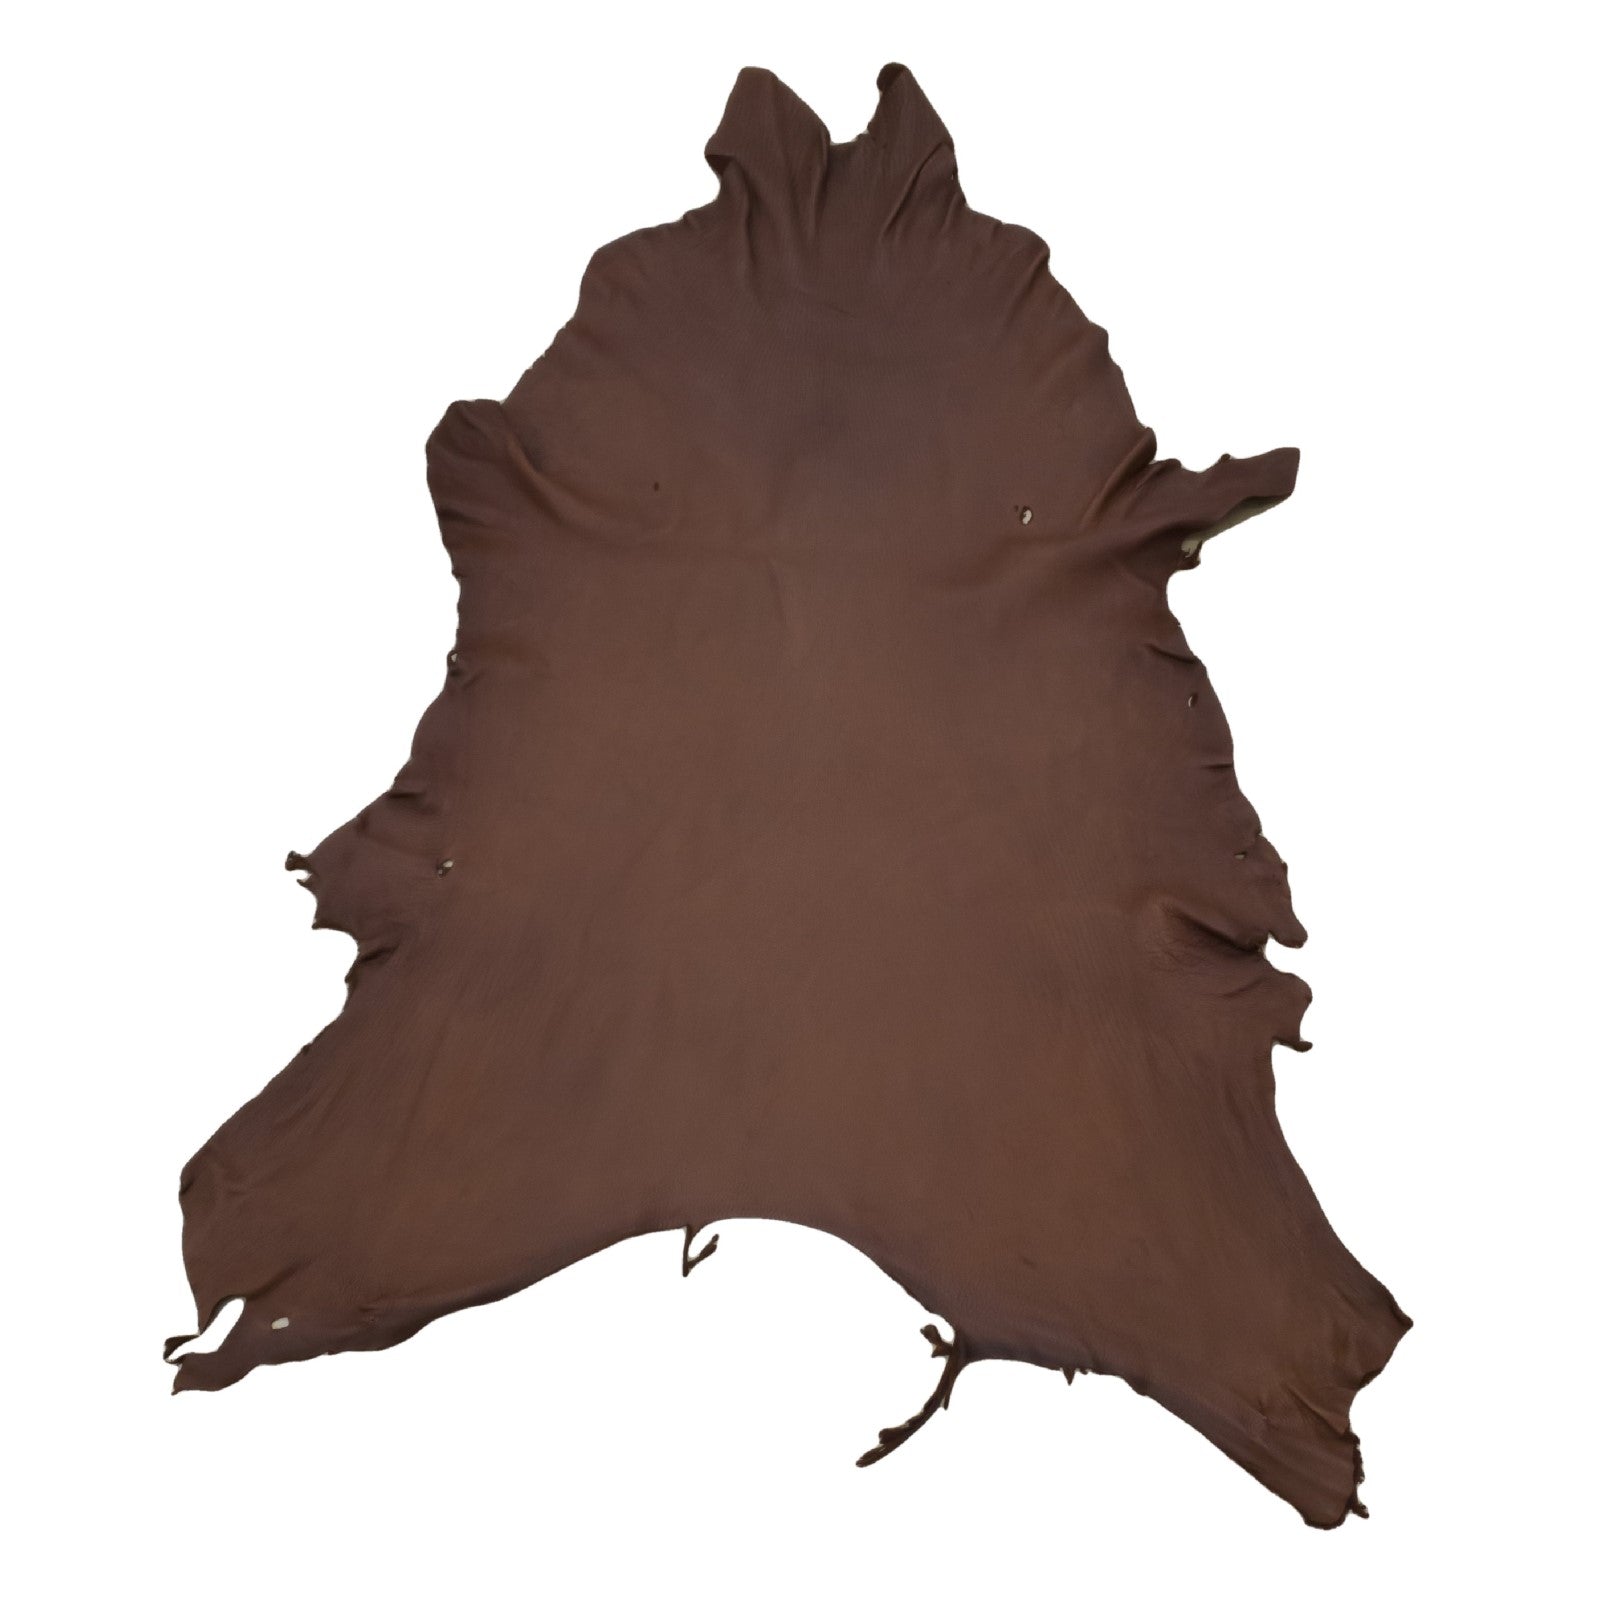 Chocolate, 3-5 oz, 5-16 SF, Colorado Buckskin Deer Hides, Premium / 8-10 / 3-4 oz | The Leather Guy